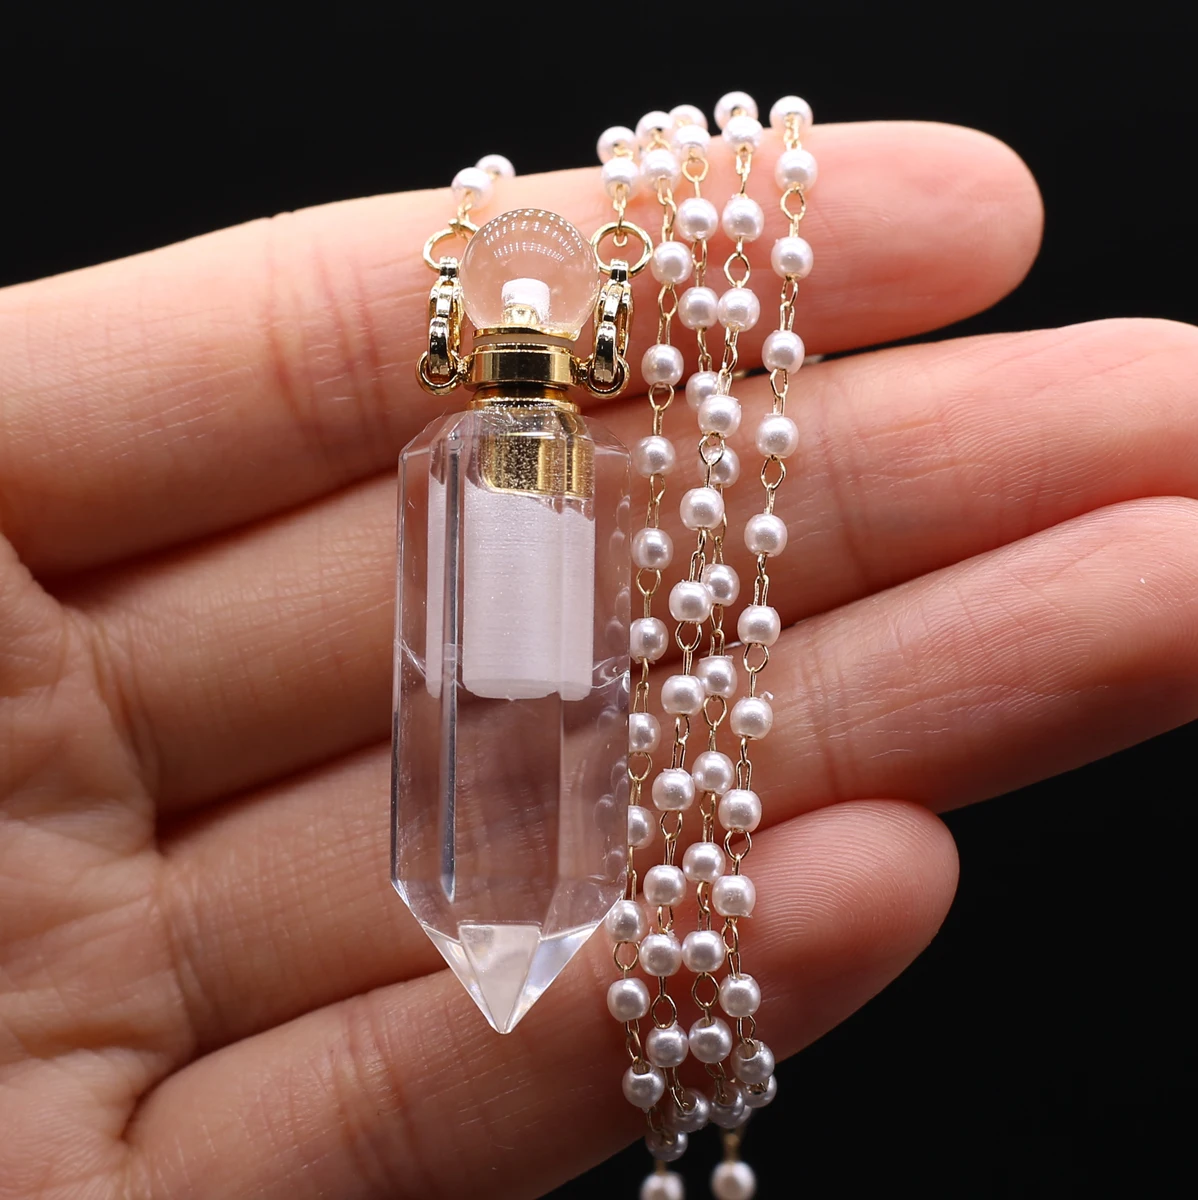 Купи Natural Stone Perfume Bottle Pendant Necklace Reiki Healing White Crystal Clear Quartz Pendants Neck Chain Necklaces for Women за 454 рублей в магазине AliExpress